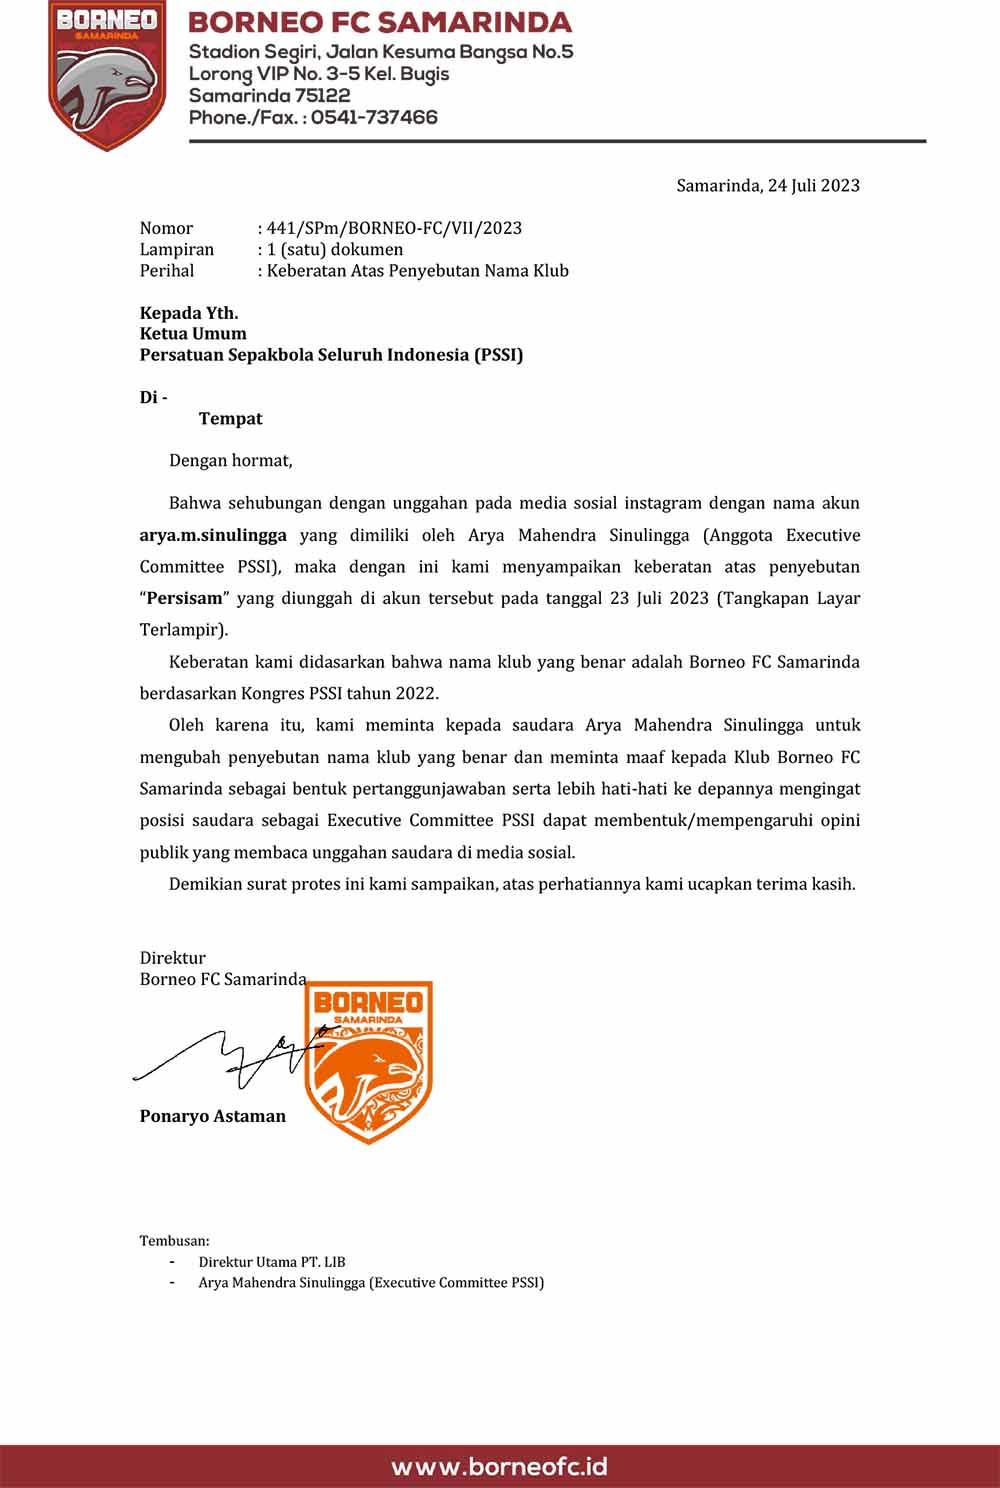 Surat Keberatan Atas Penyebutan Nama Klub. (Foto: Borneo FC) Copyright: Borneo FC